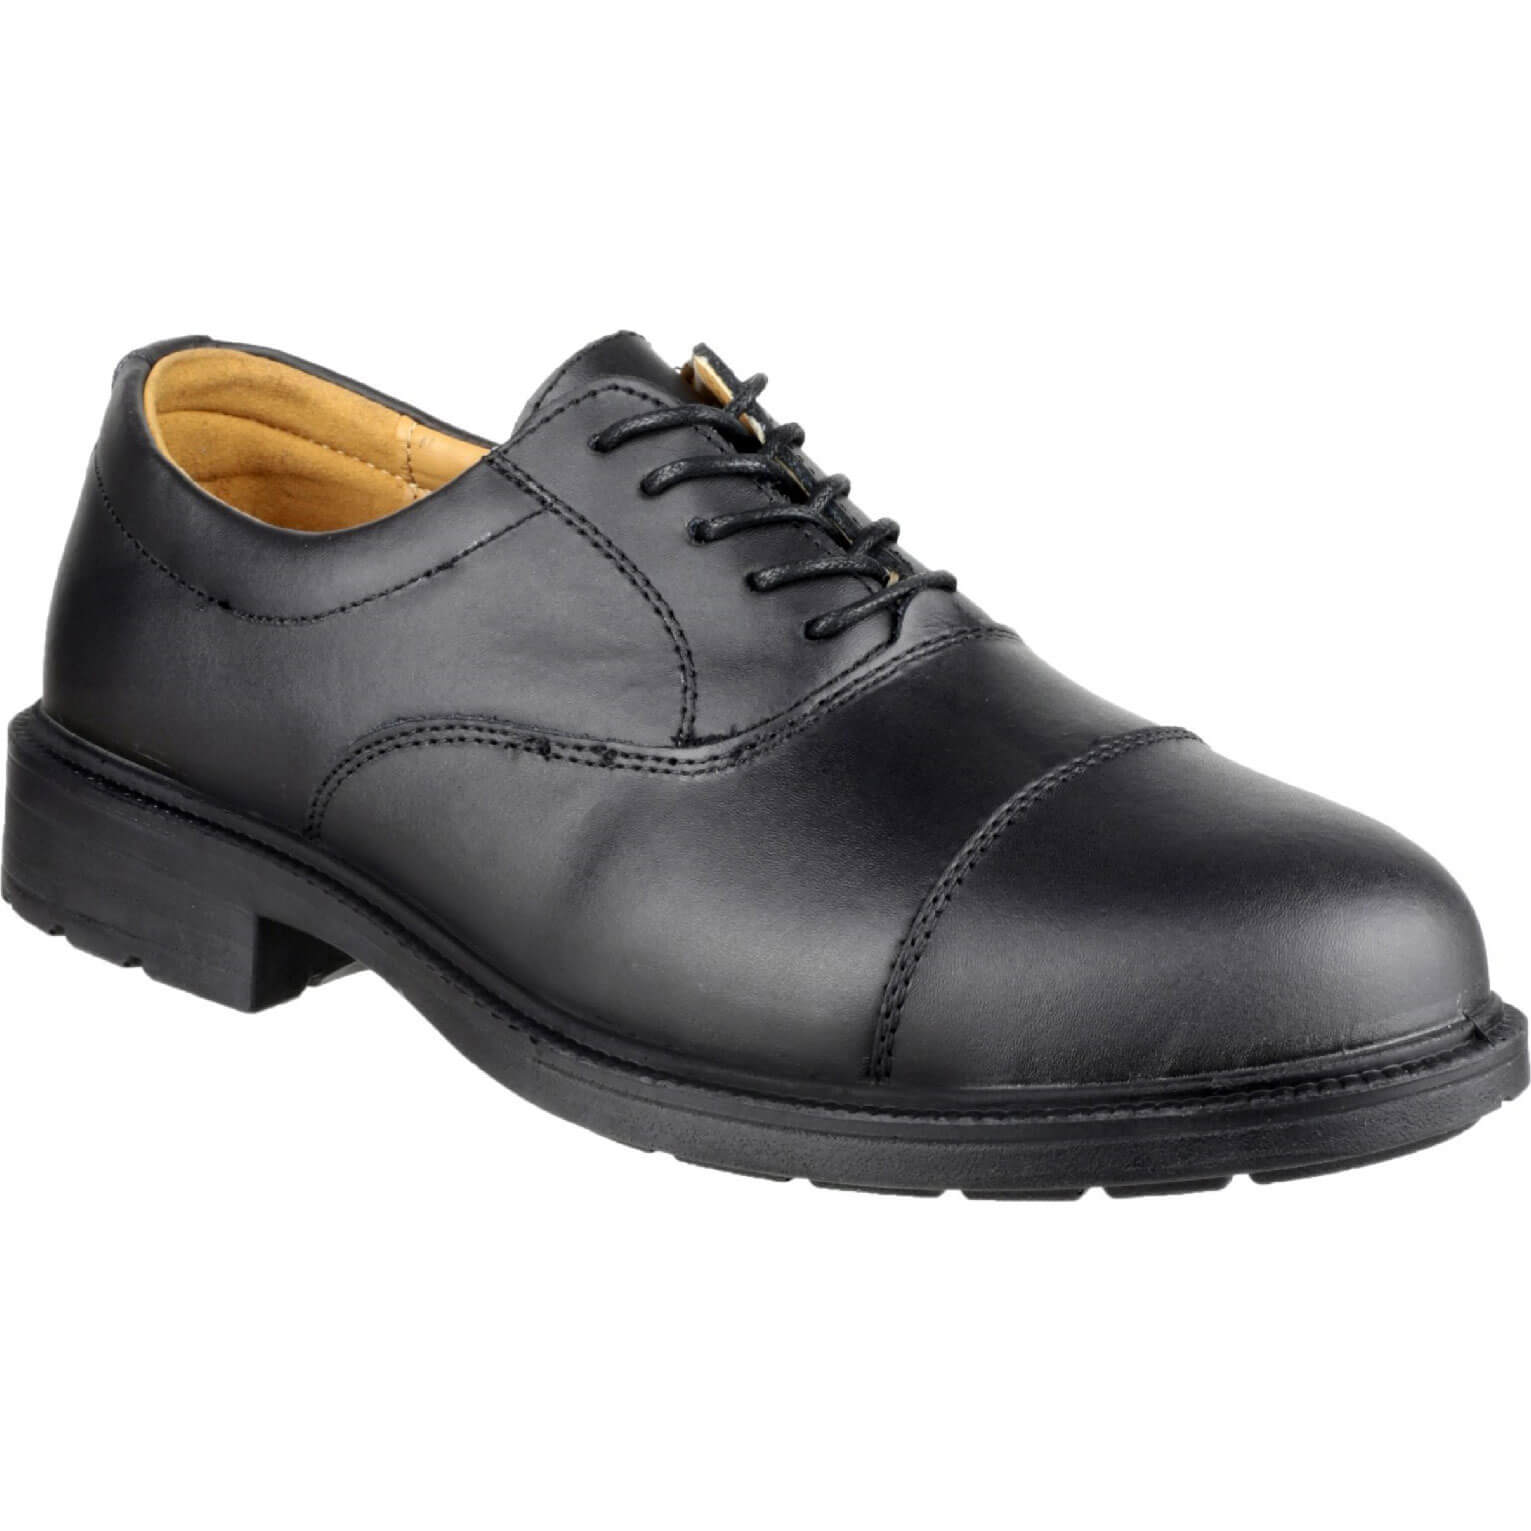 Image of Amblers Safety FS43 Work Safety Shoe Black Size 6